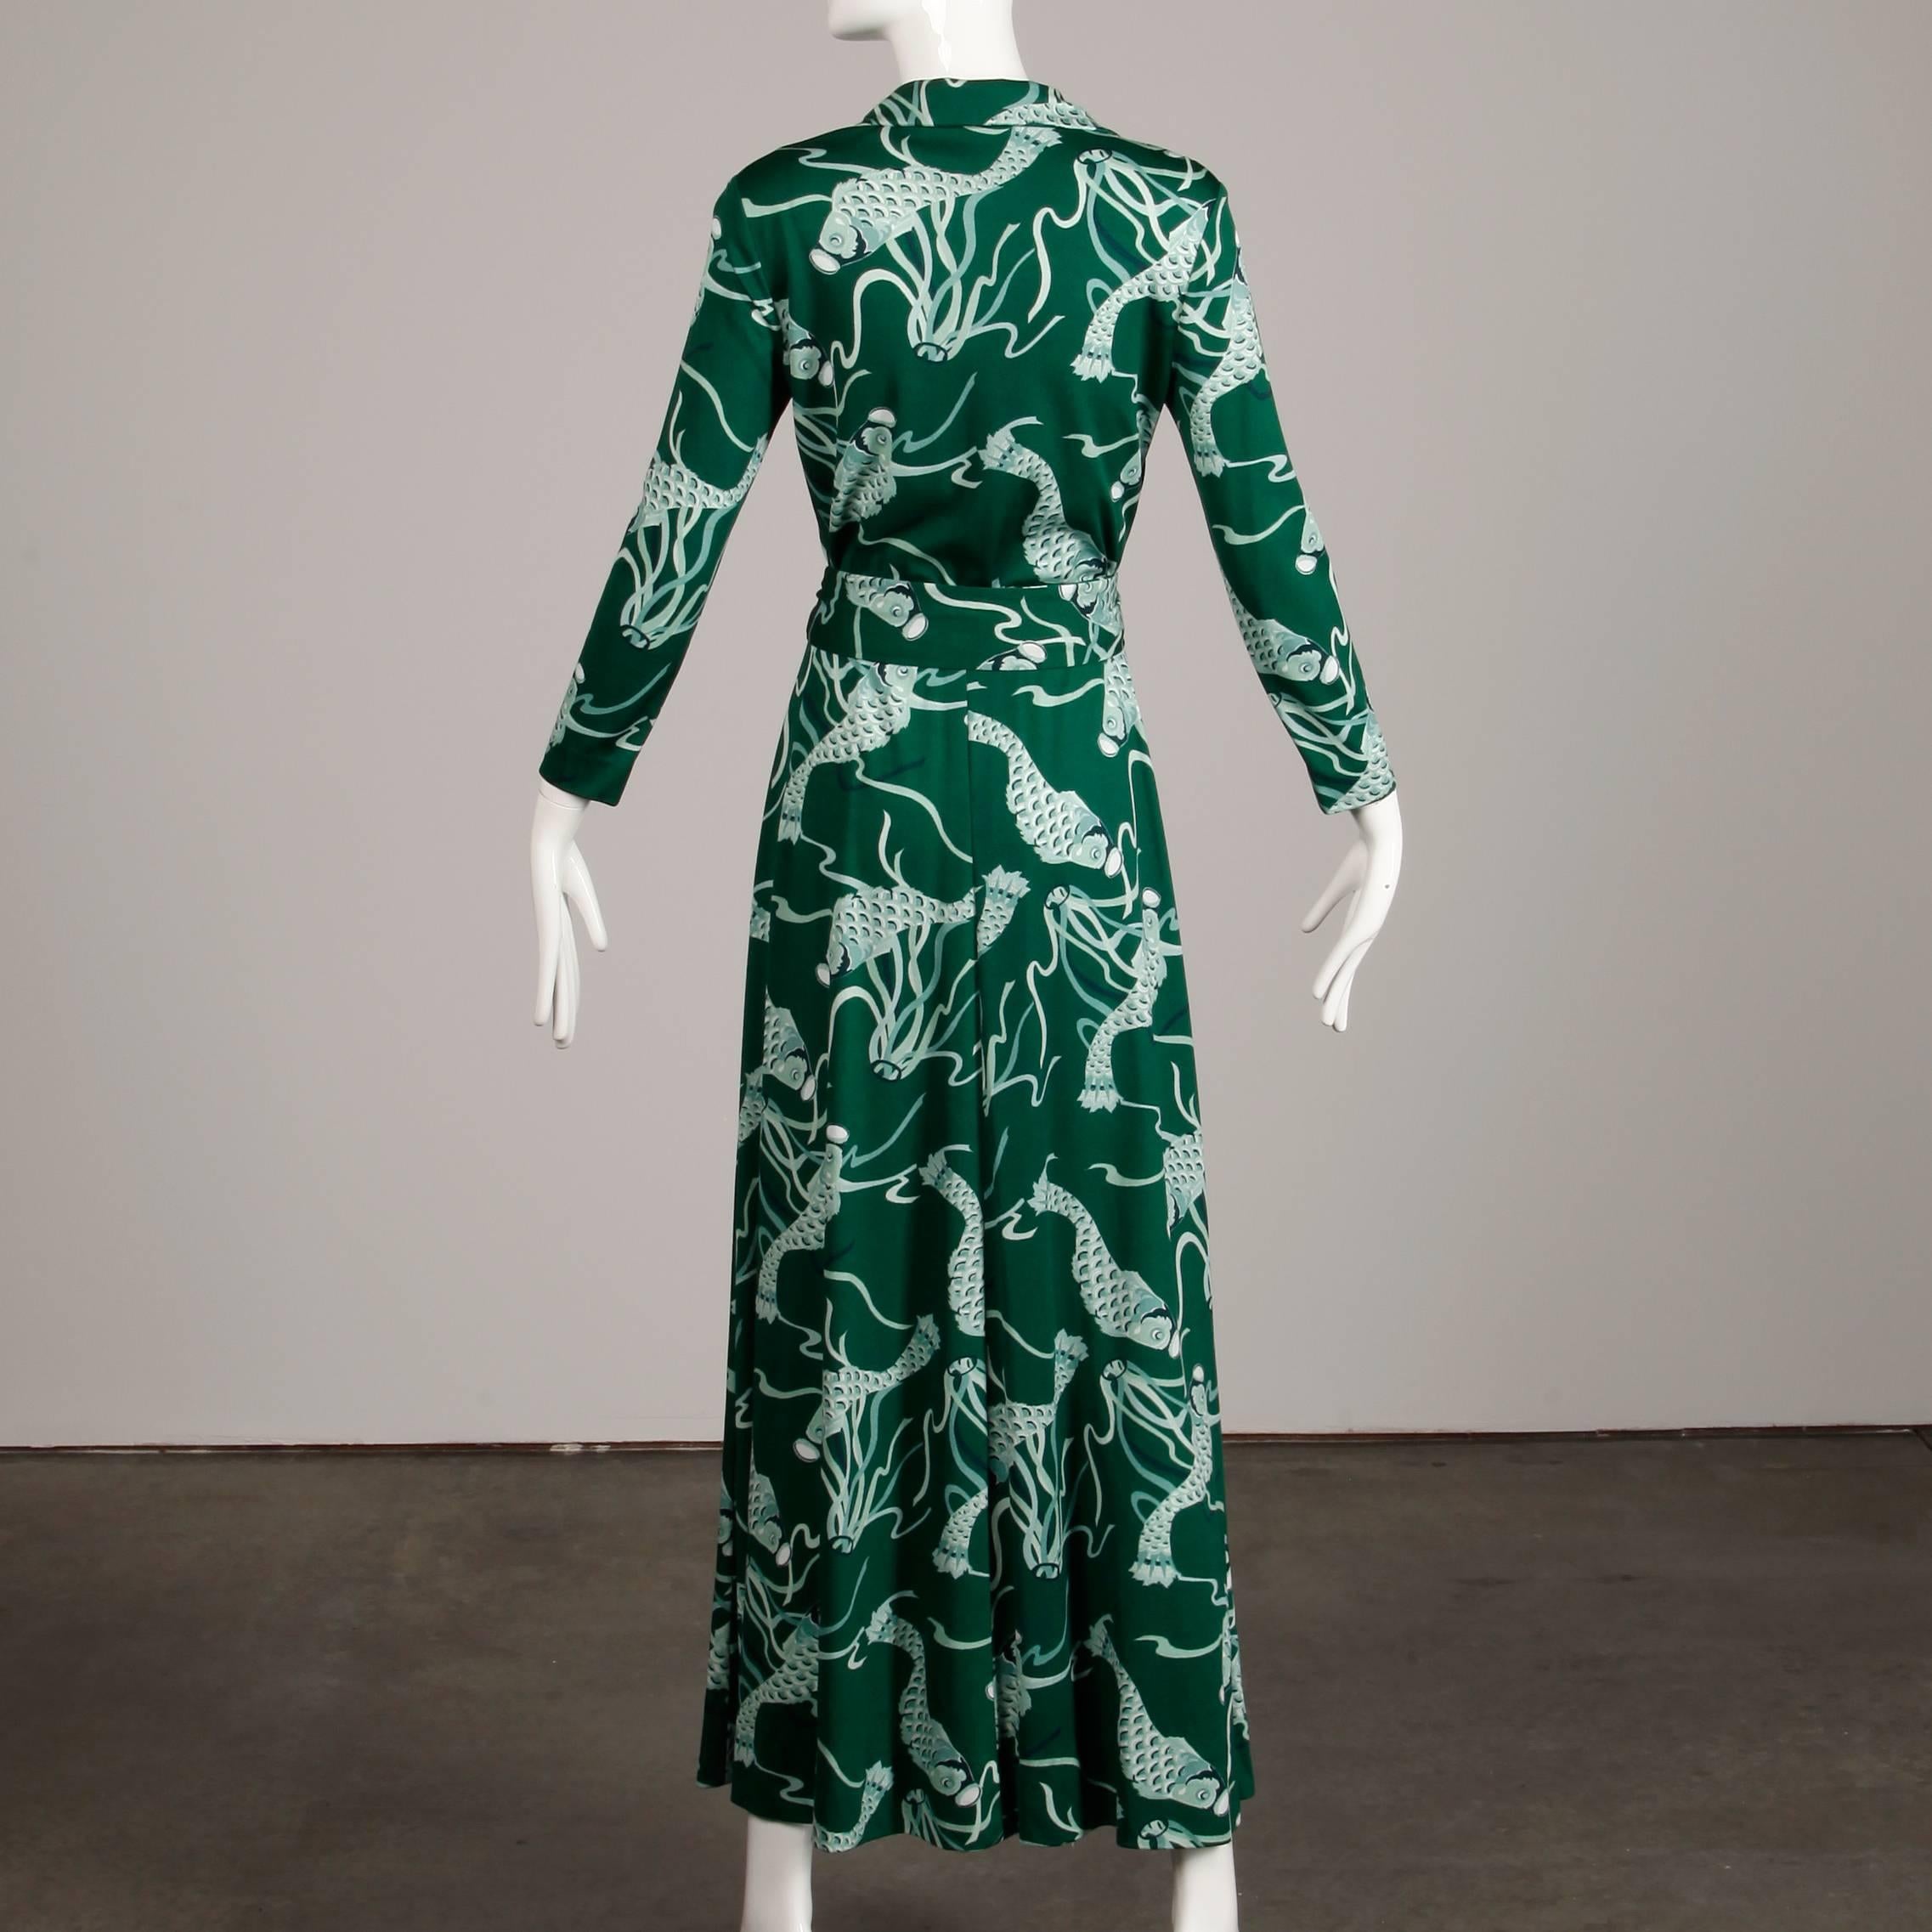 Women's Green Novelty Print Vintage Maxi Dress with an Op Art Koi Fish Print, 1970s 